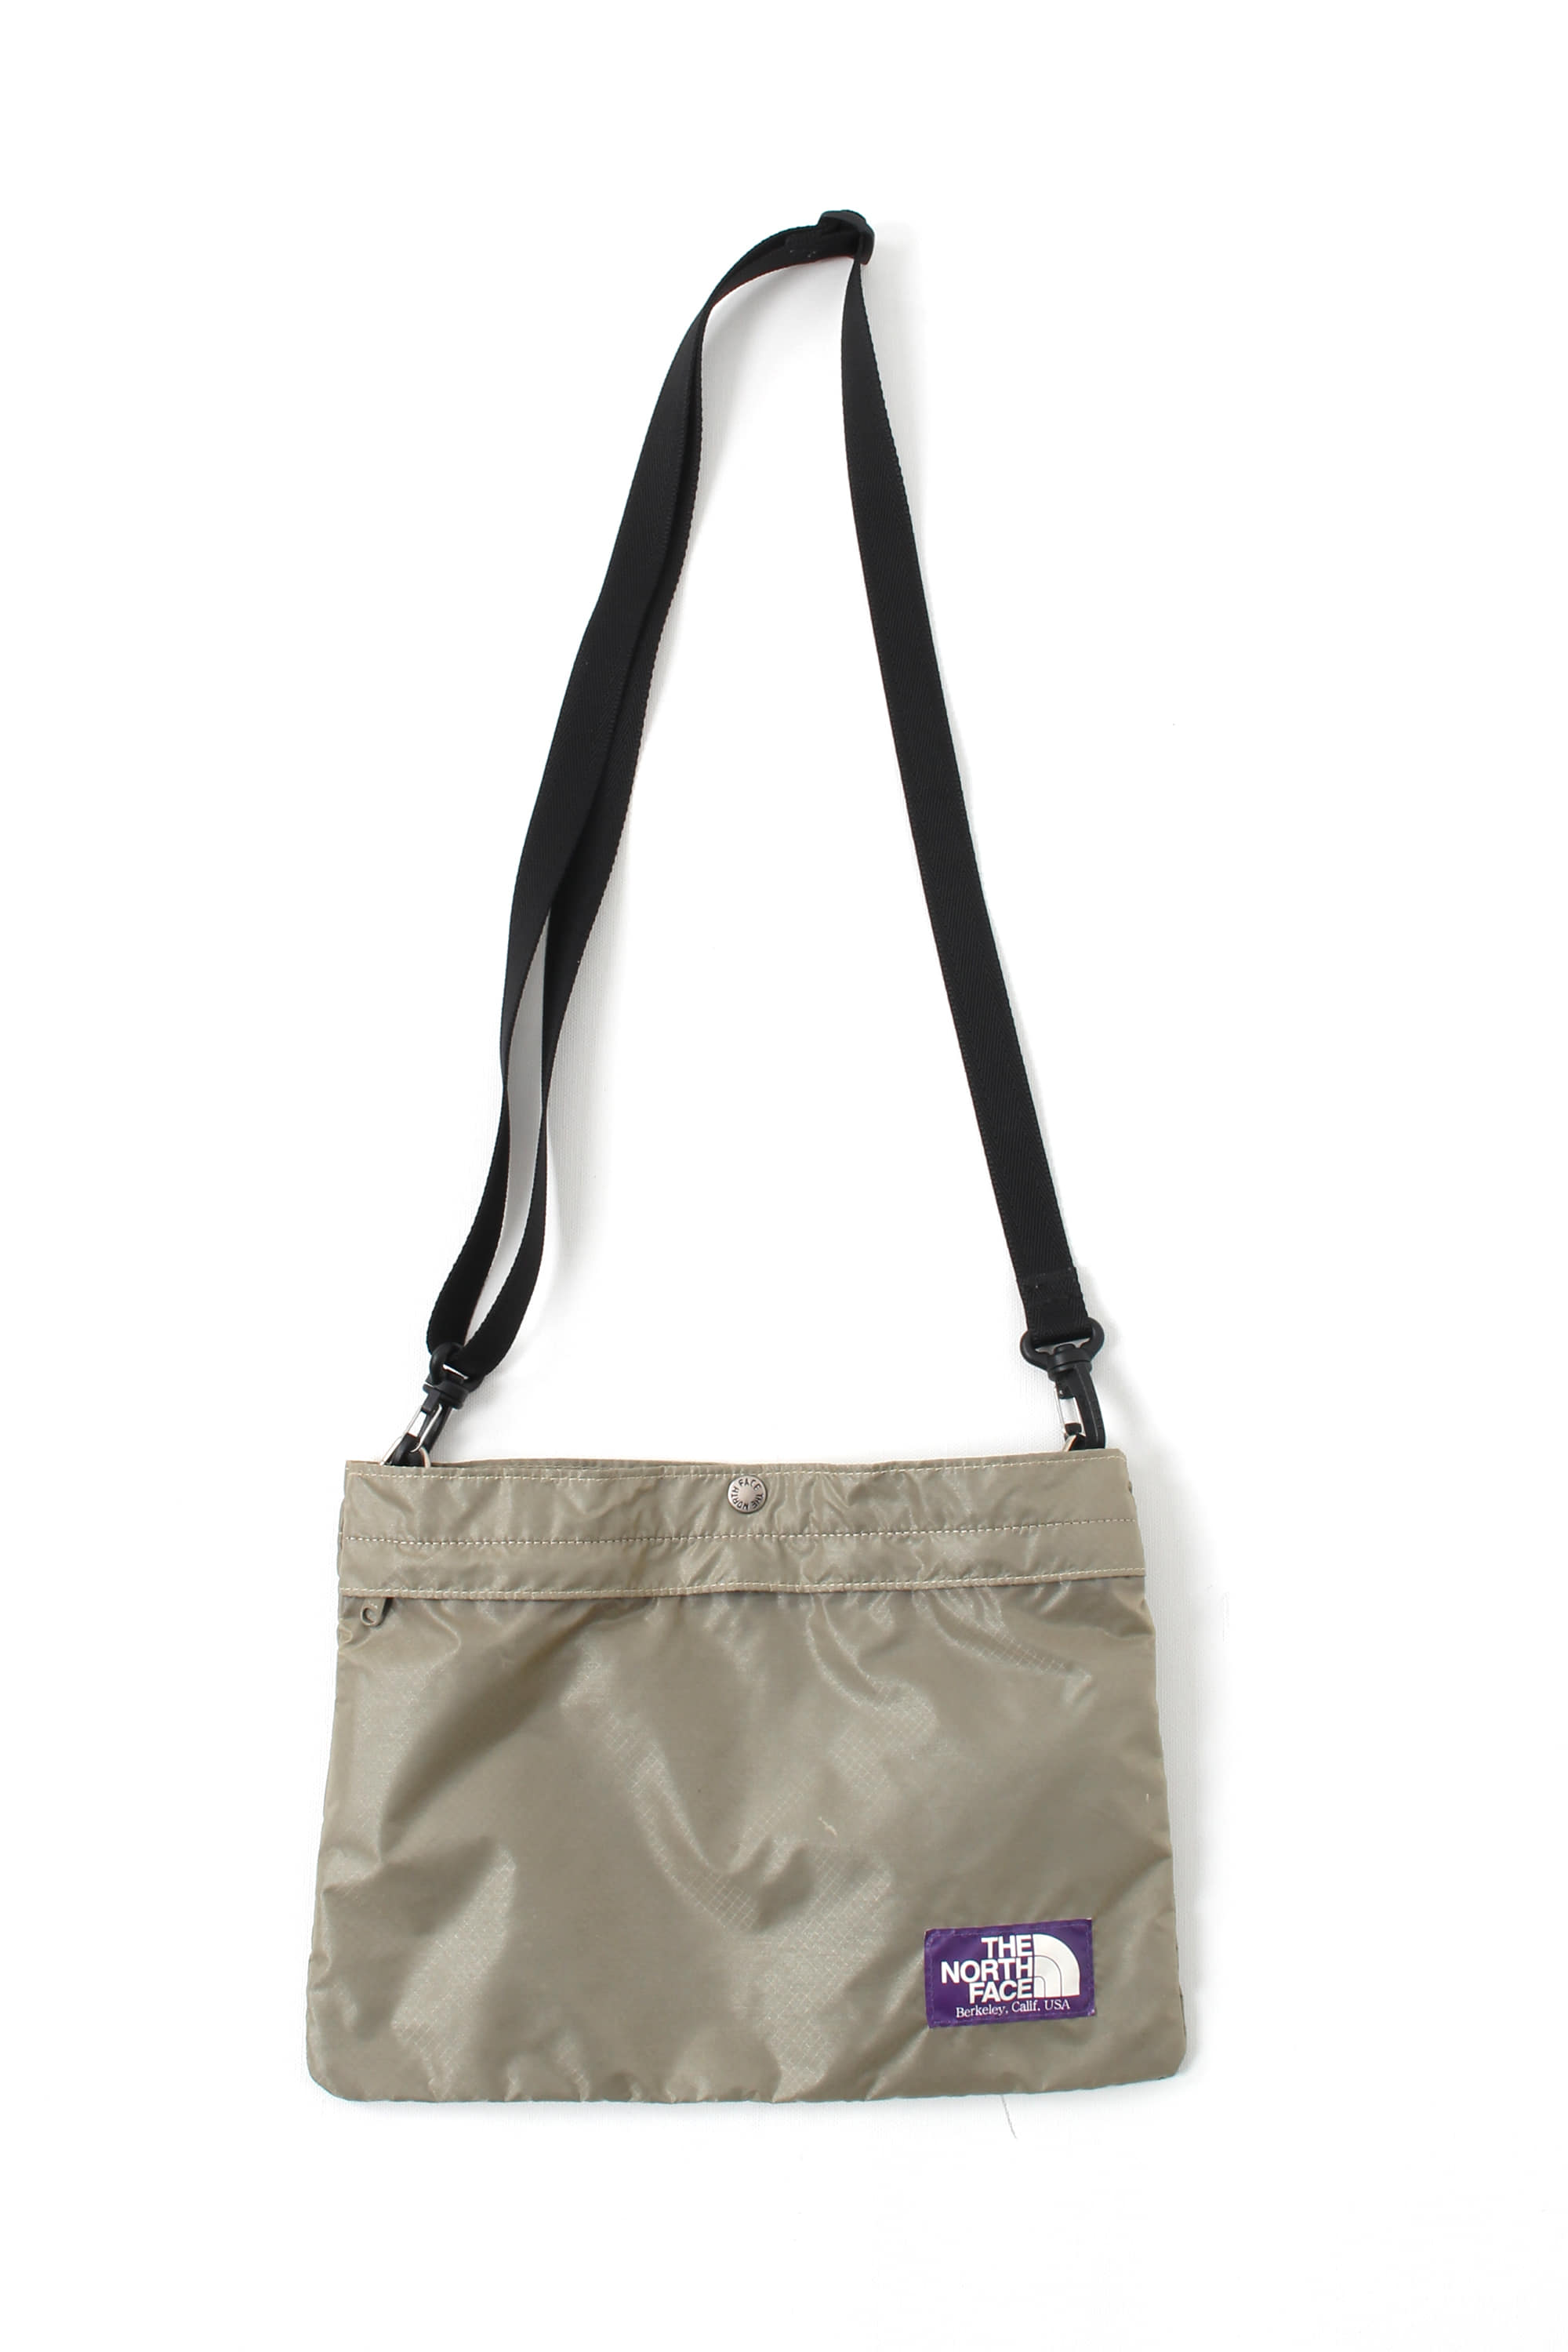 The North Face Purple Label Sacoche Bag (29*21)